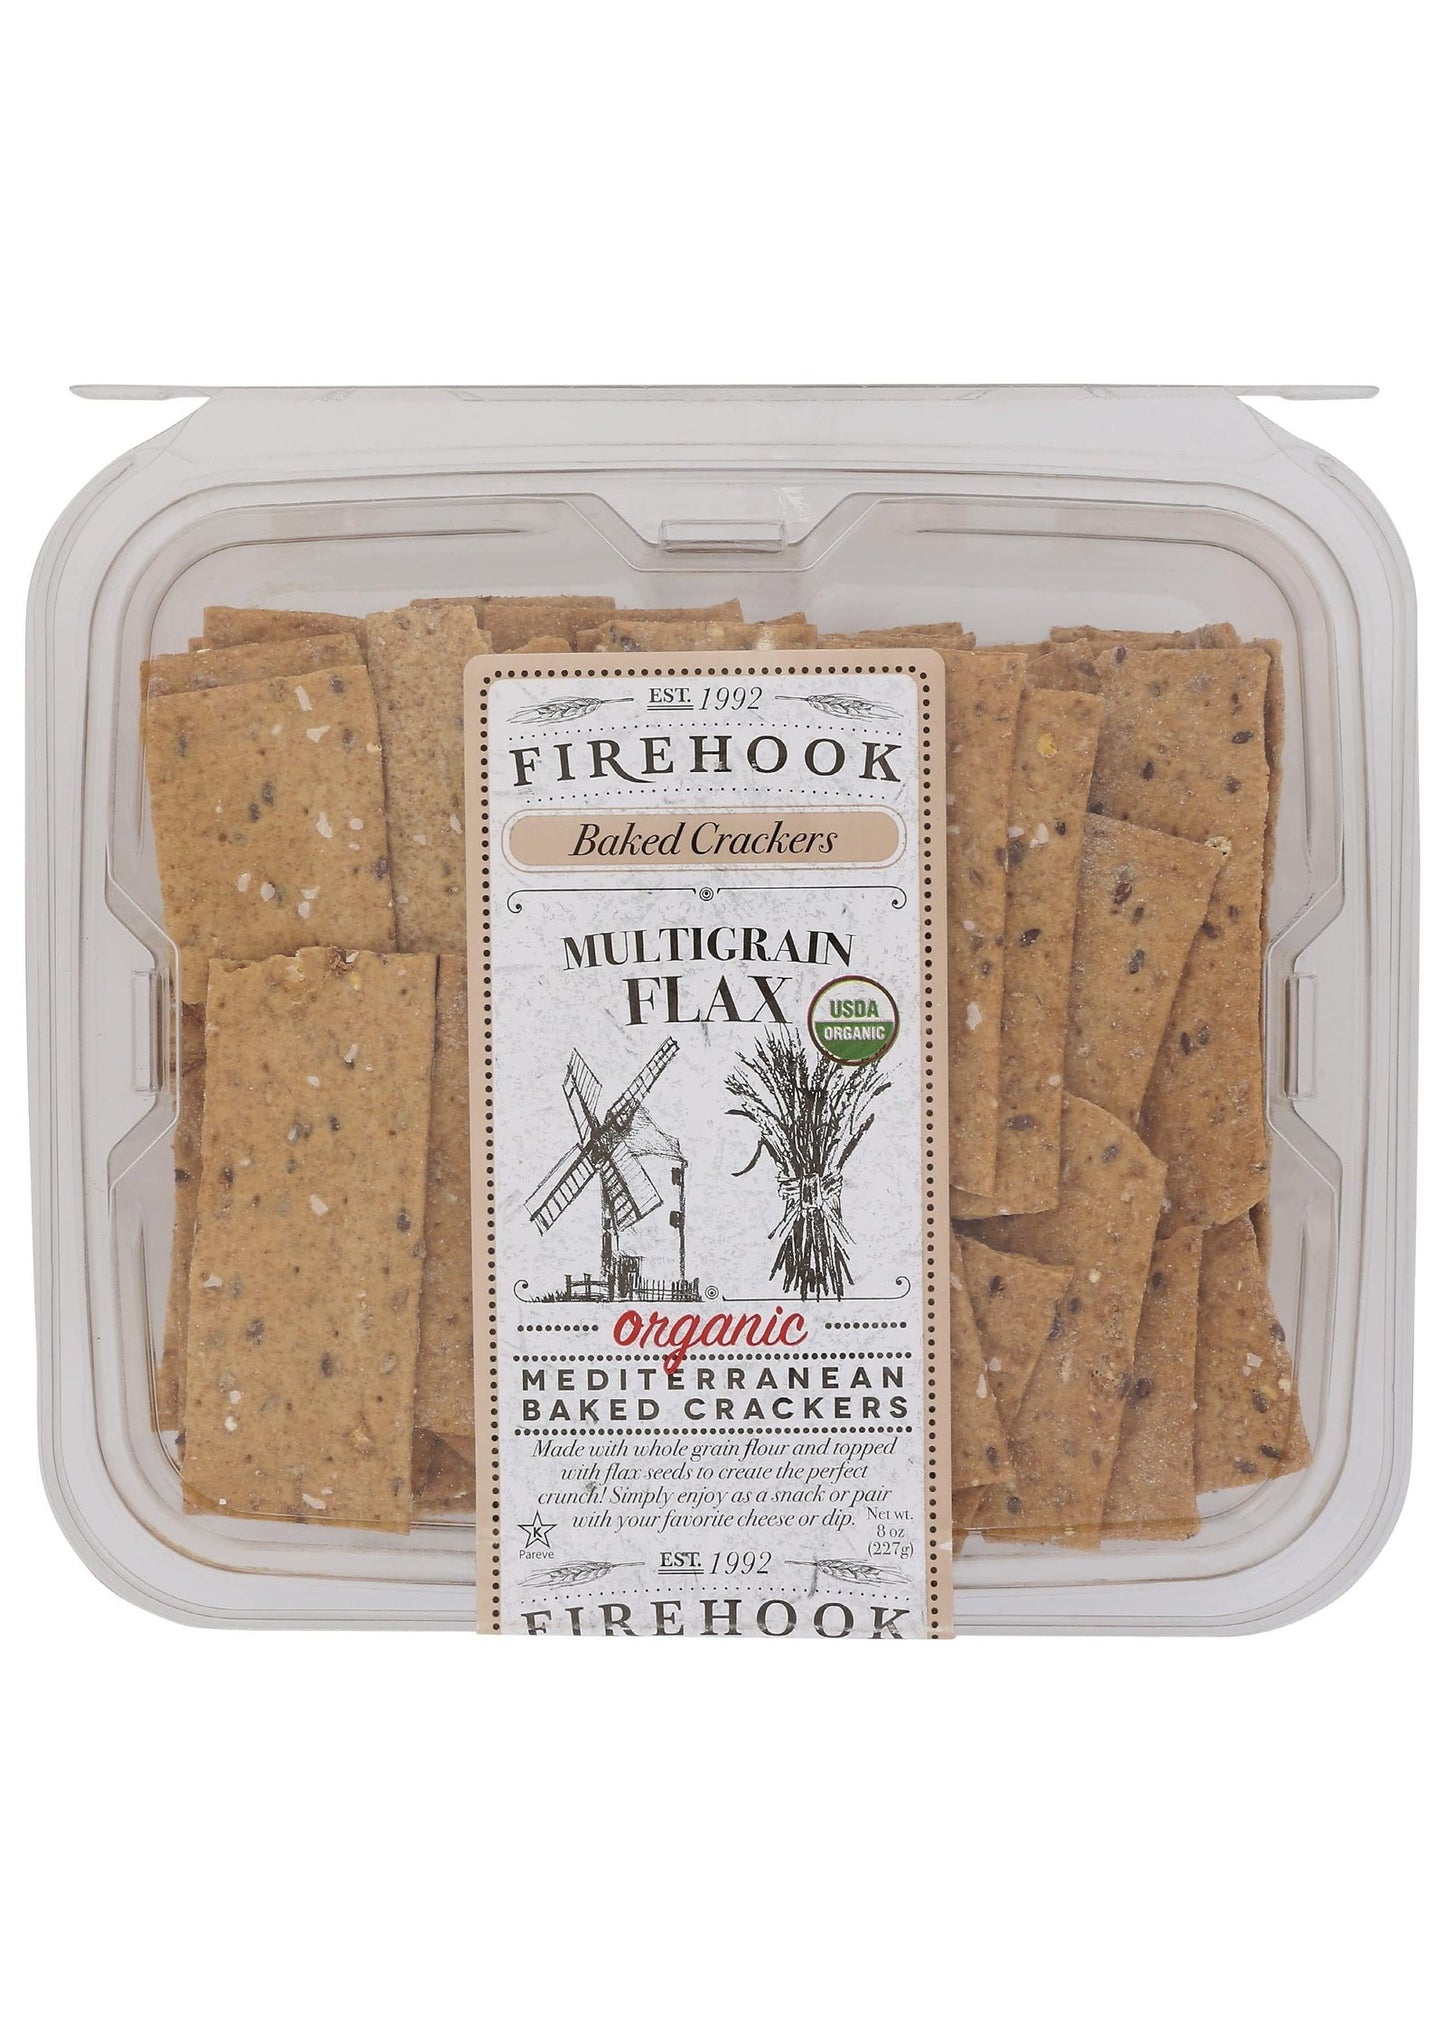 FIREHOOK Faxseed Cracker